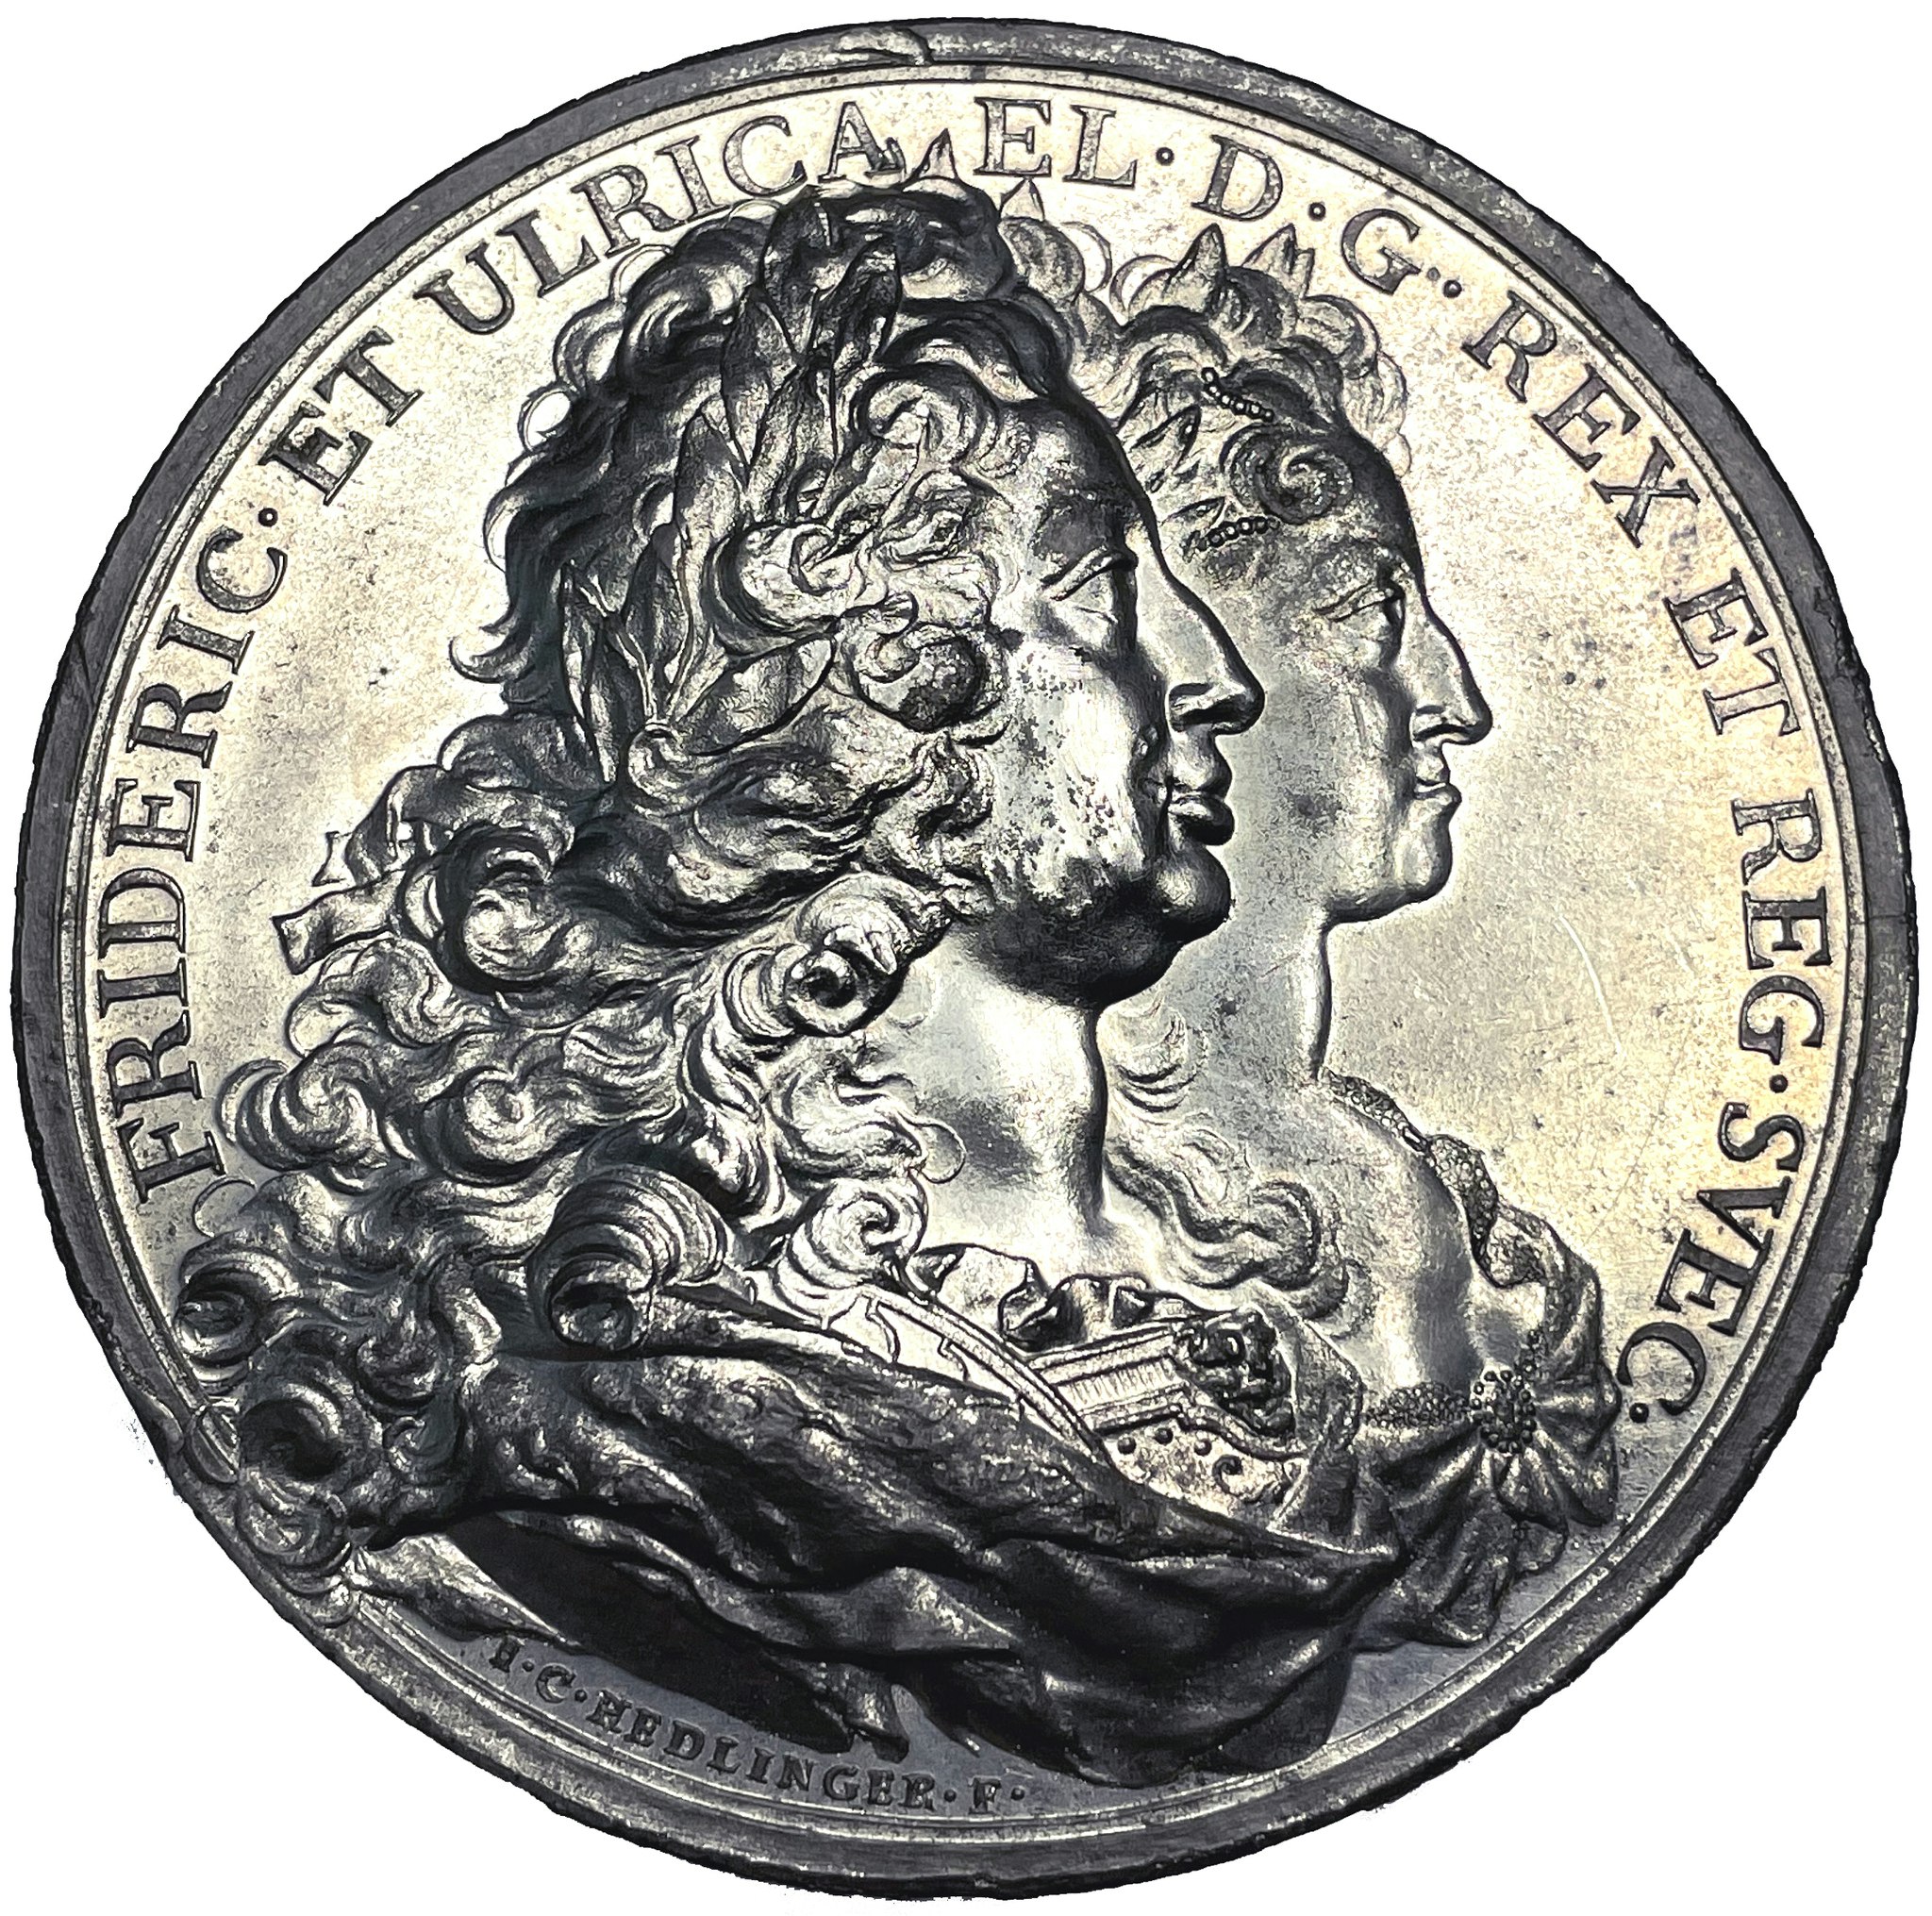 Fredrik I & Ulrika Eleonora Kungahusets ära 1723 av Johann Carl Hedlinger - OCIRKULERAT PRAKTEXEMPLAR - RR